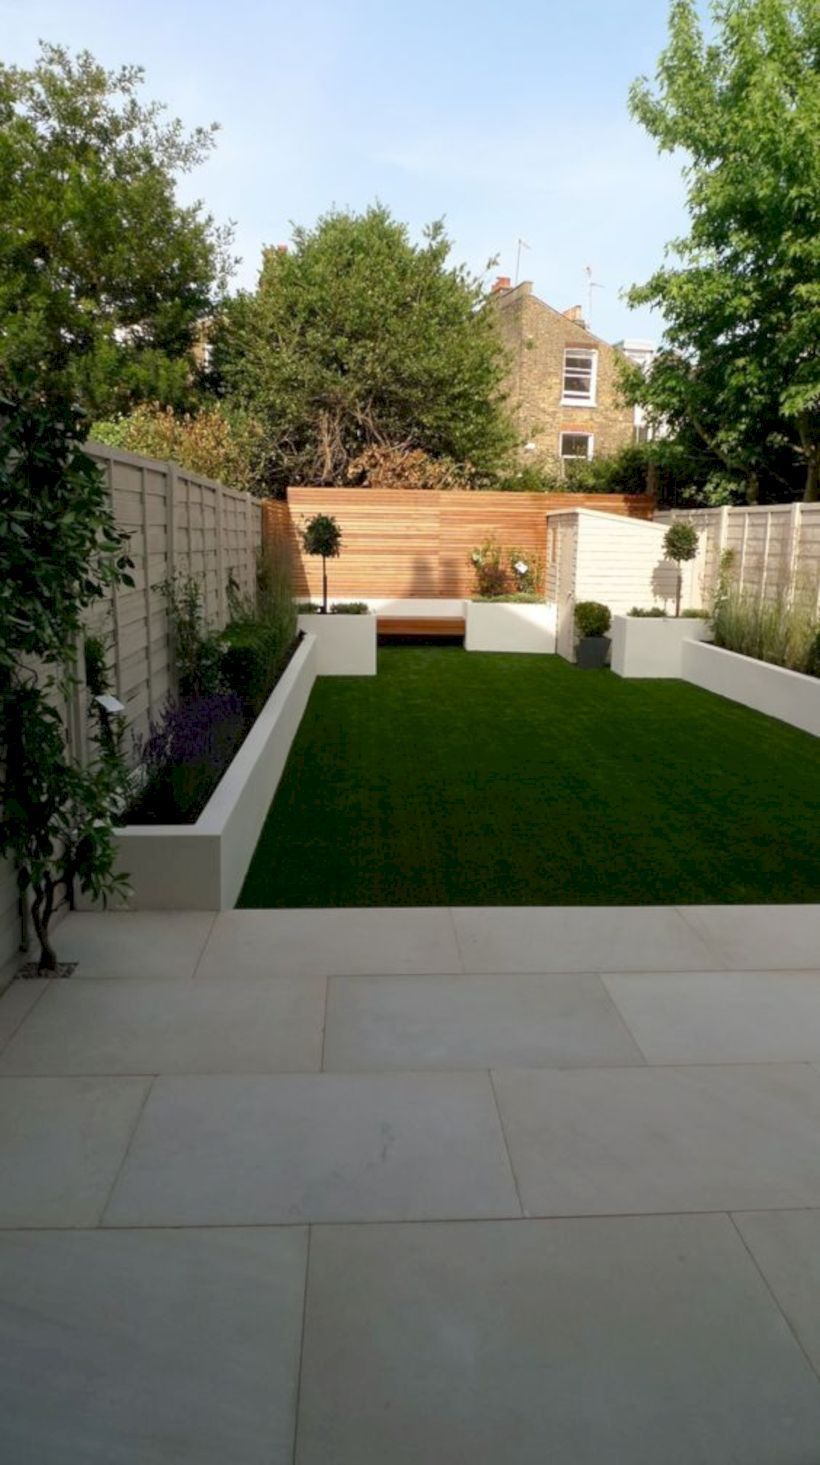 52 Latest Small Courtyard Garden Design Ideas For Your House -   15 garden design Minimalist courtyards ideas